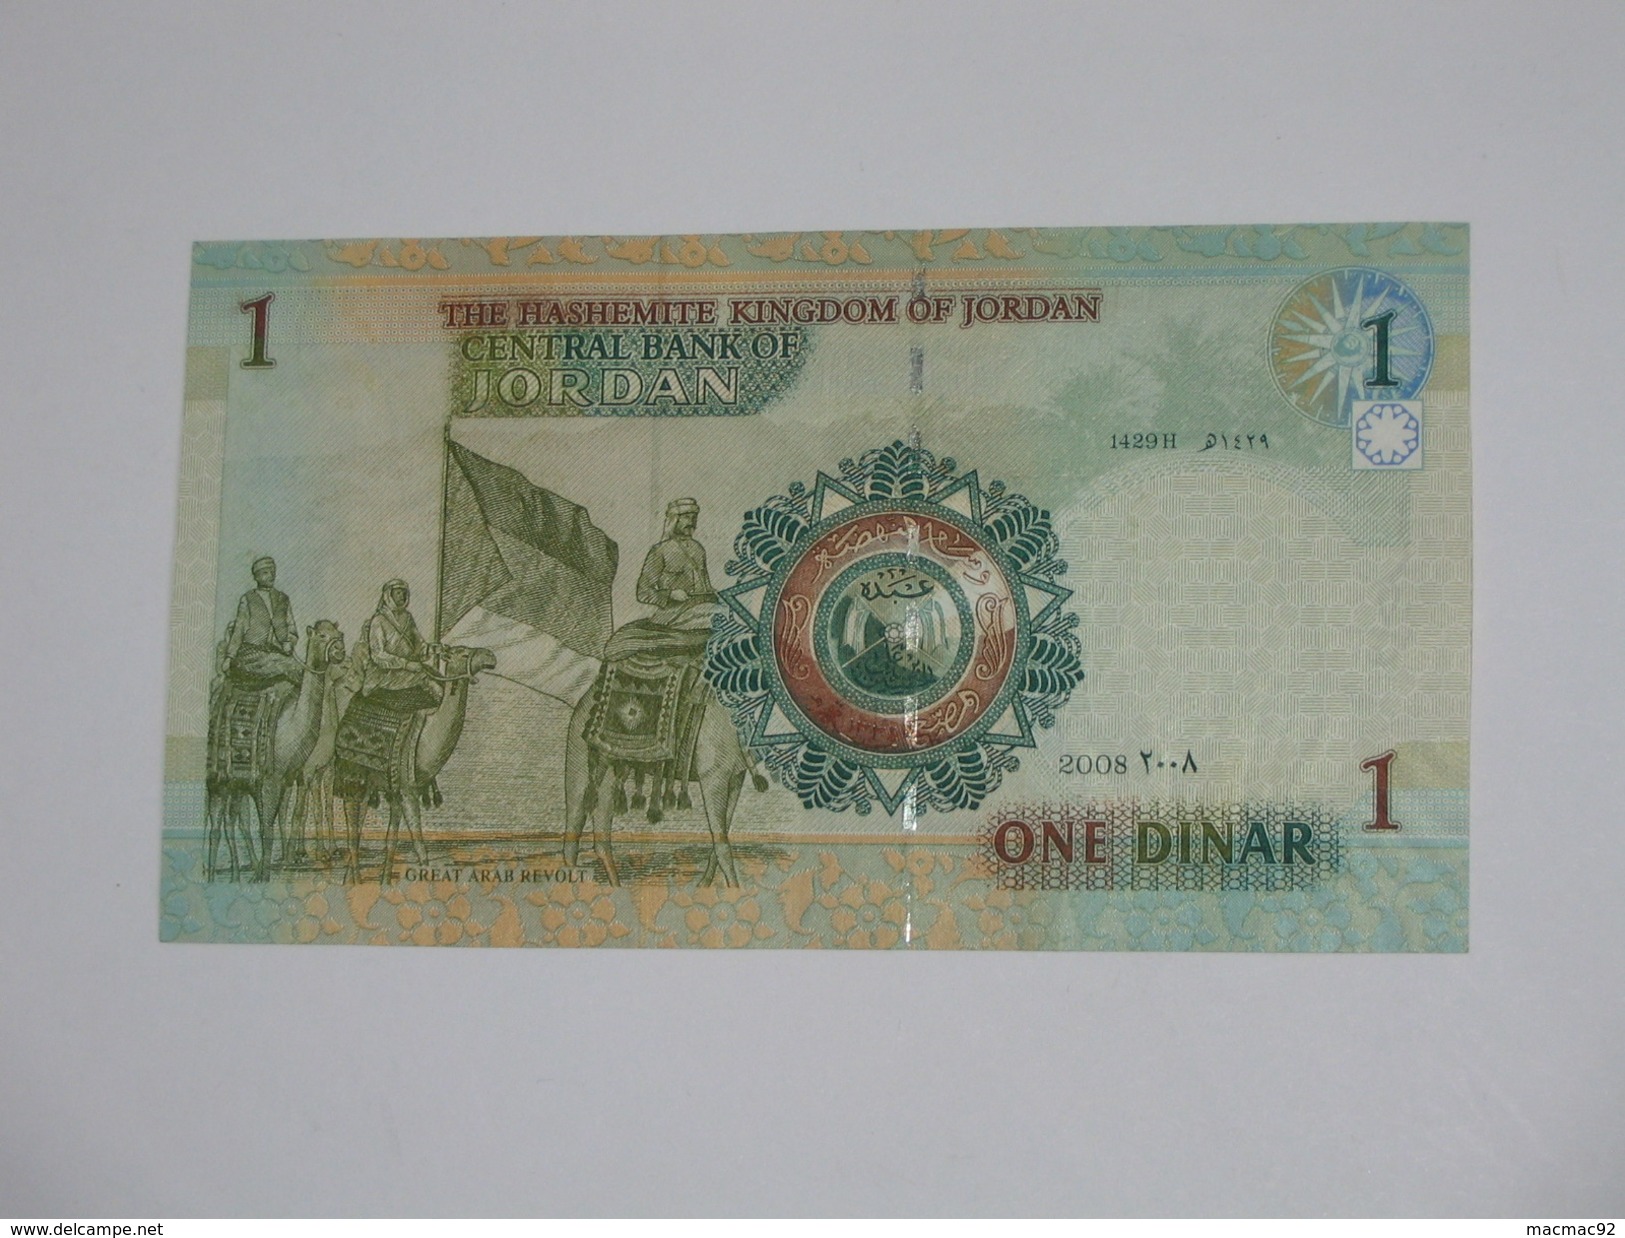 1 One Dinar  2008 - Central Bank Of Jordan  **** EN ACHAT IMMEDIAT **** - Jordanie